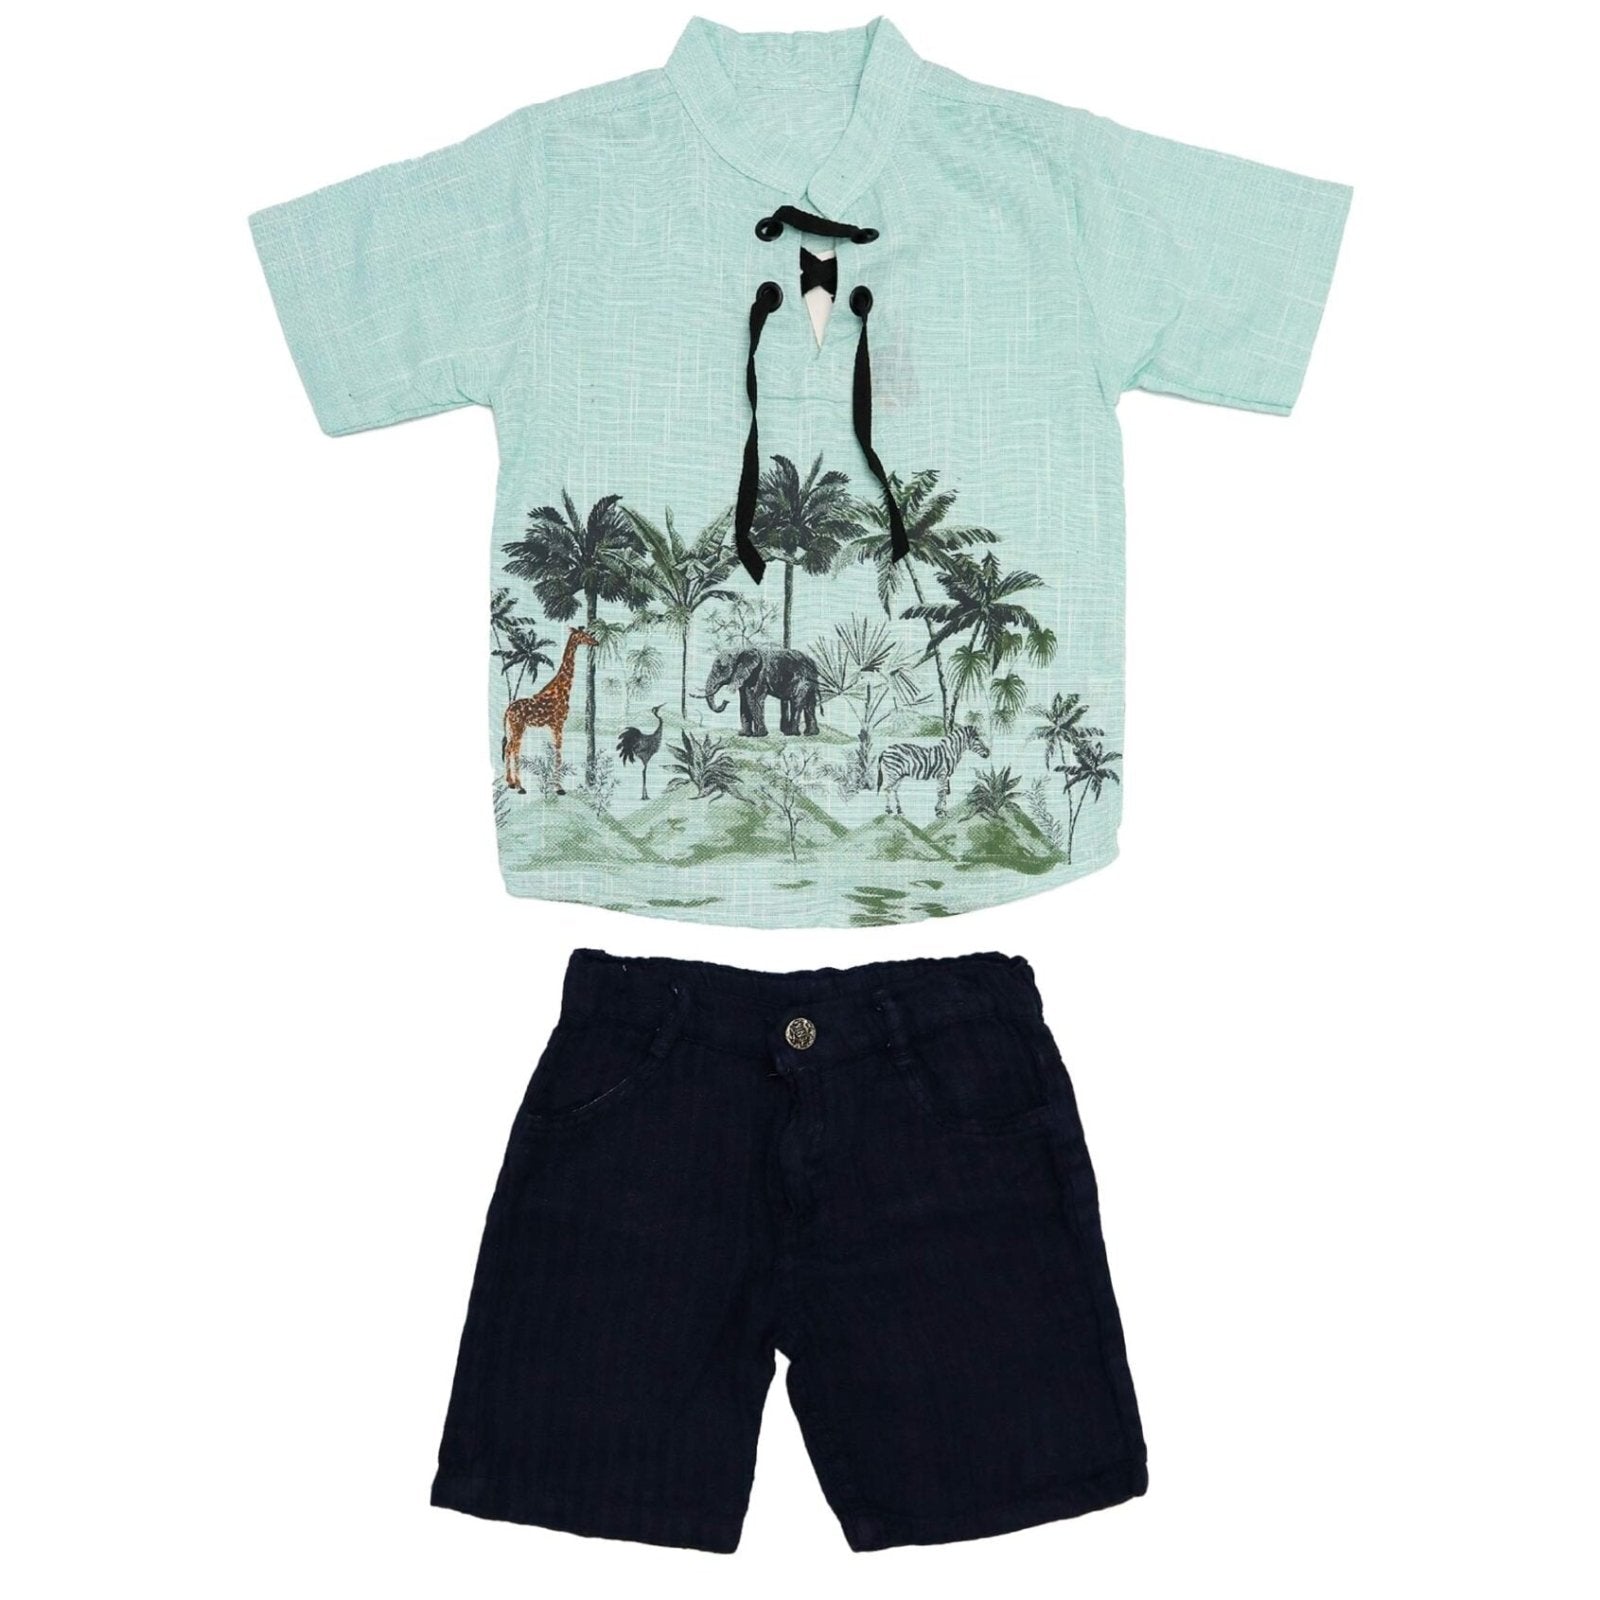 Boys Suit Jungle Print Aqua Color | Made in Turkey - Zubaidas Mothershop